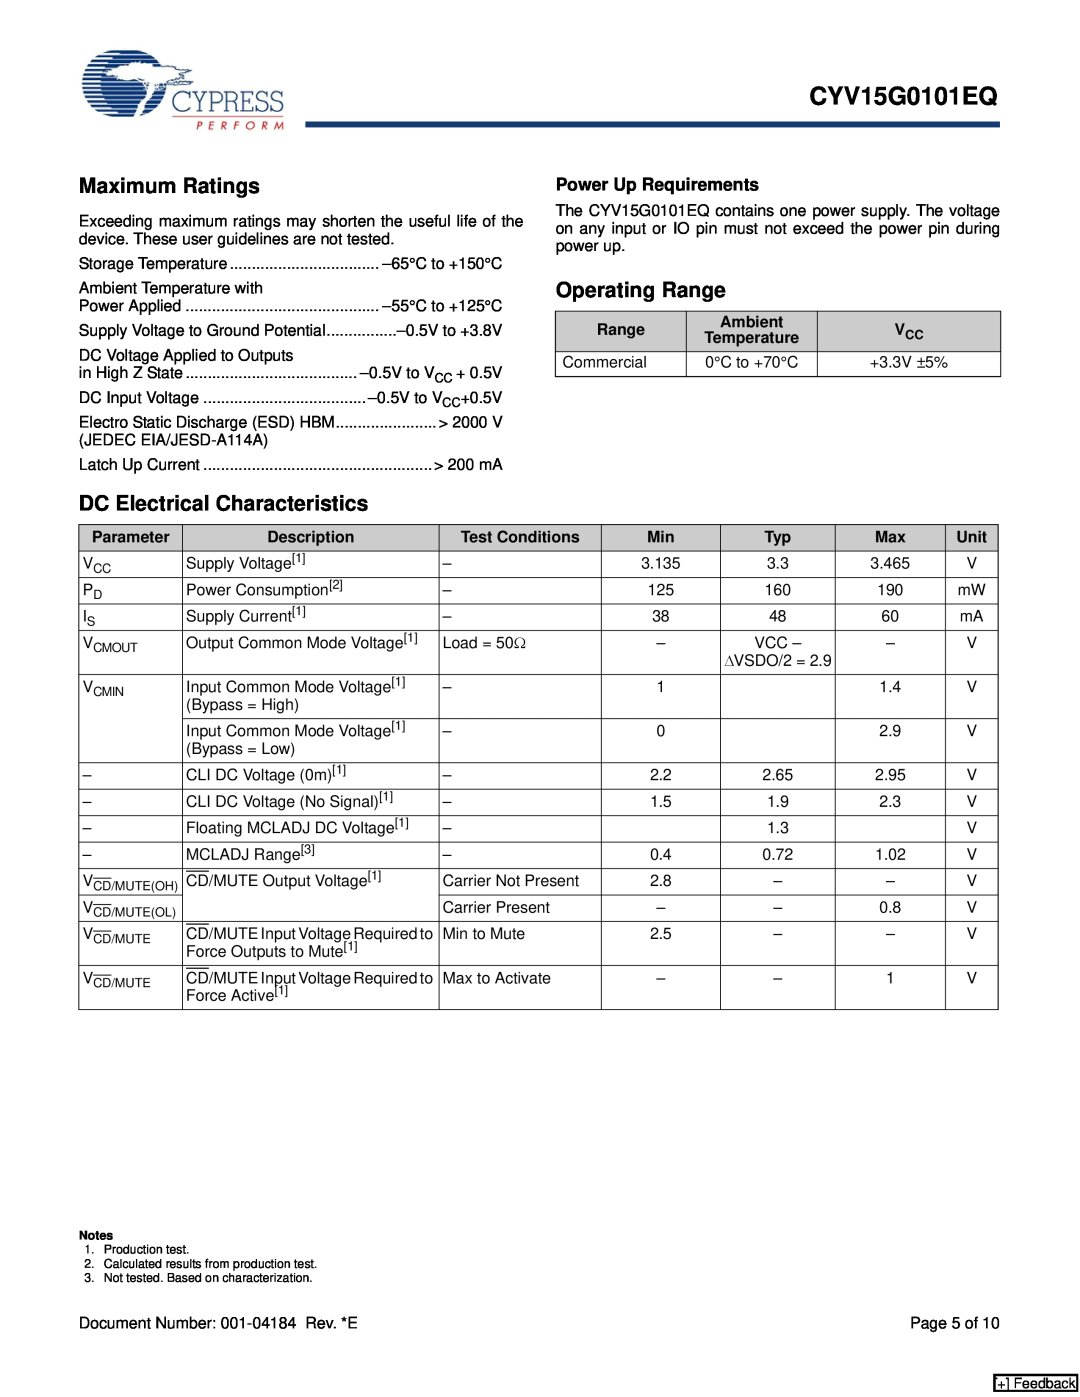 Cypress CYV15G0101EQ manual Maximum Ratings, DC Electrical Characteristics, Operating Range, Power Up Requirements 